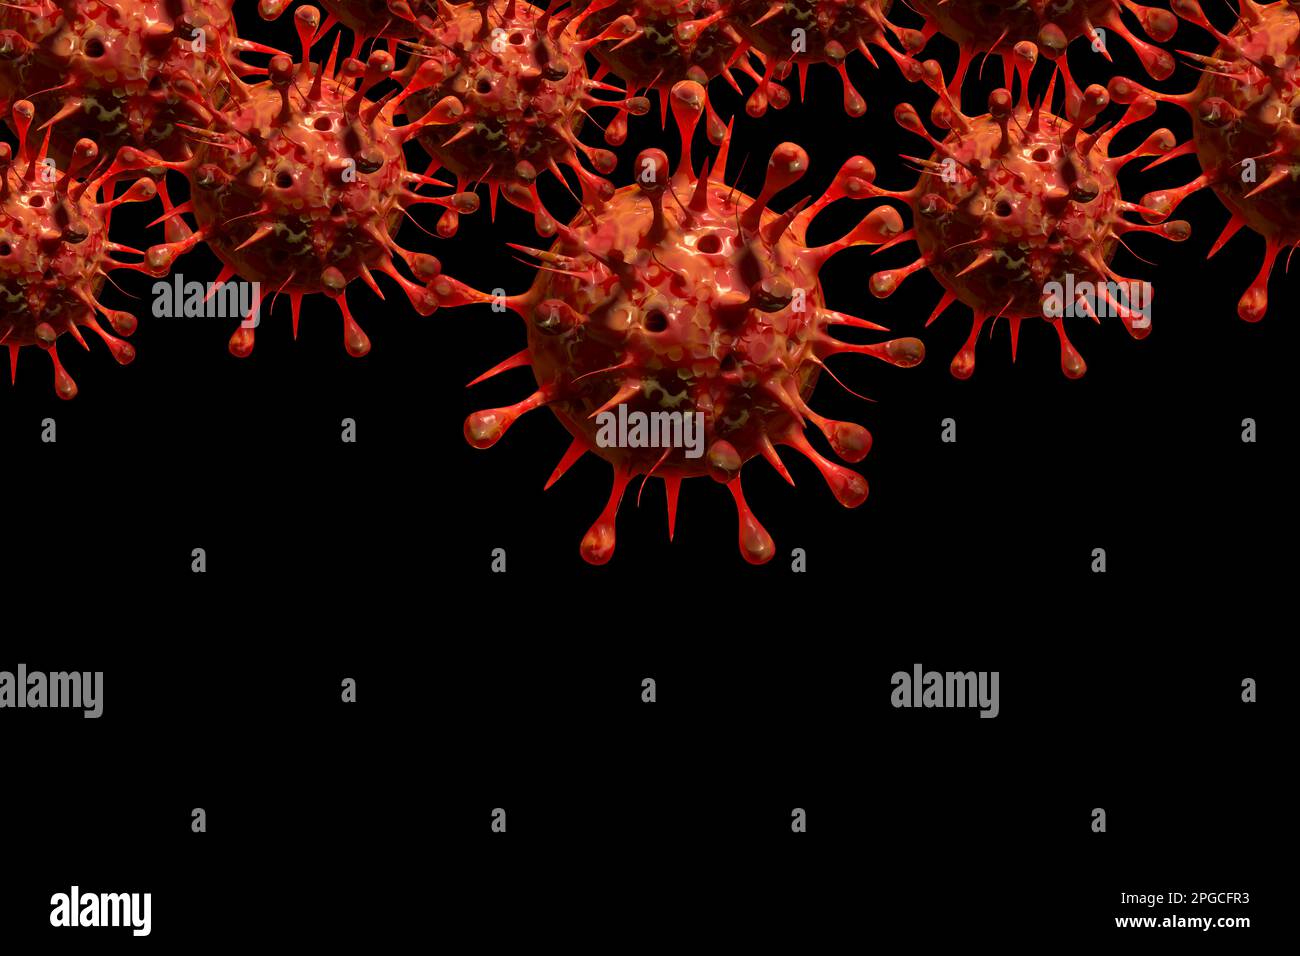 Mutated Virus Variant, 3D render of New strain of Corona Virus against a black background. Stock Photo